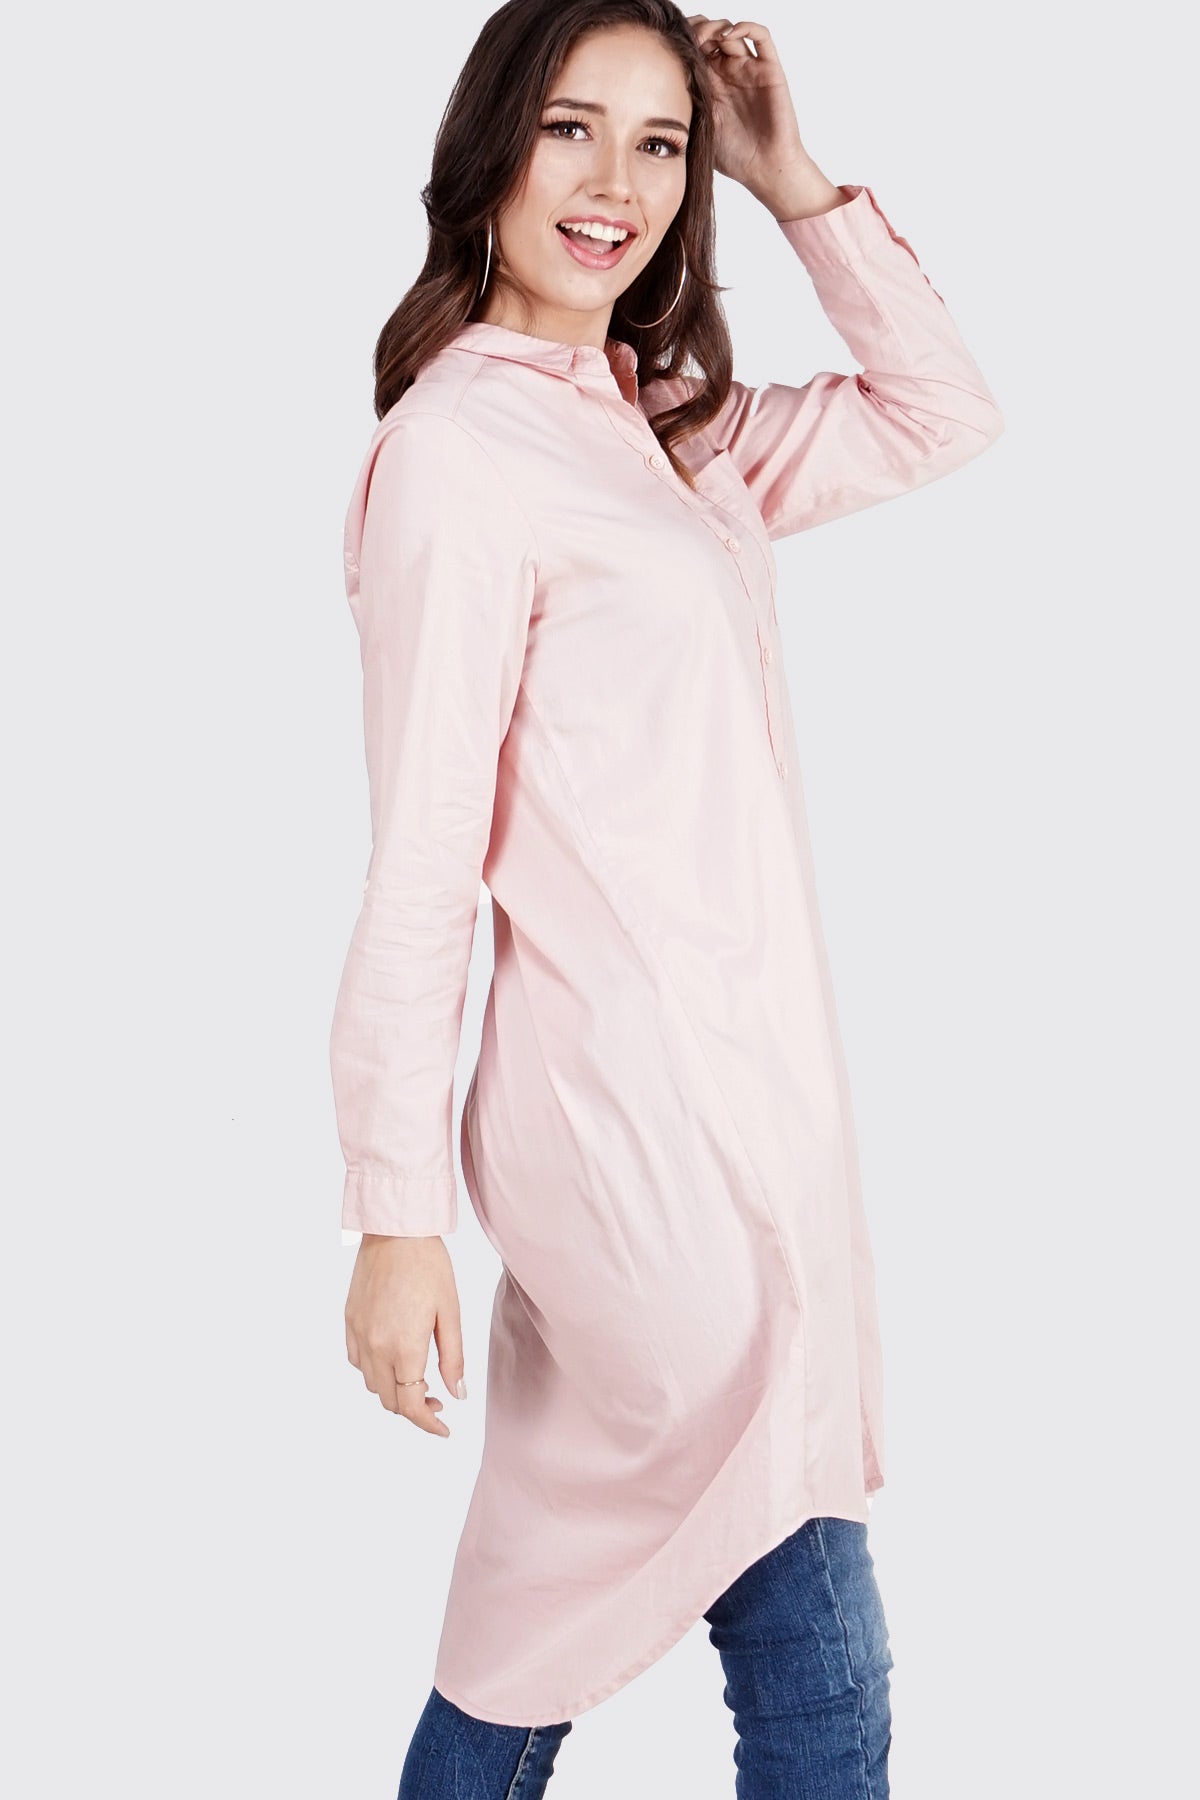 Dress Lengan Panjang Stea Pink Tunik